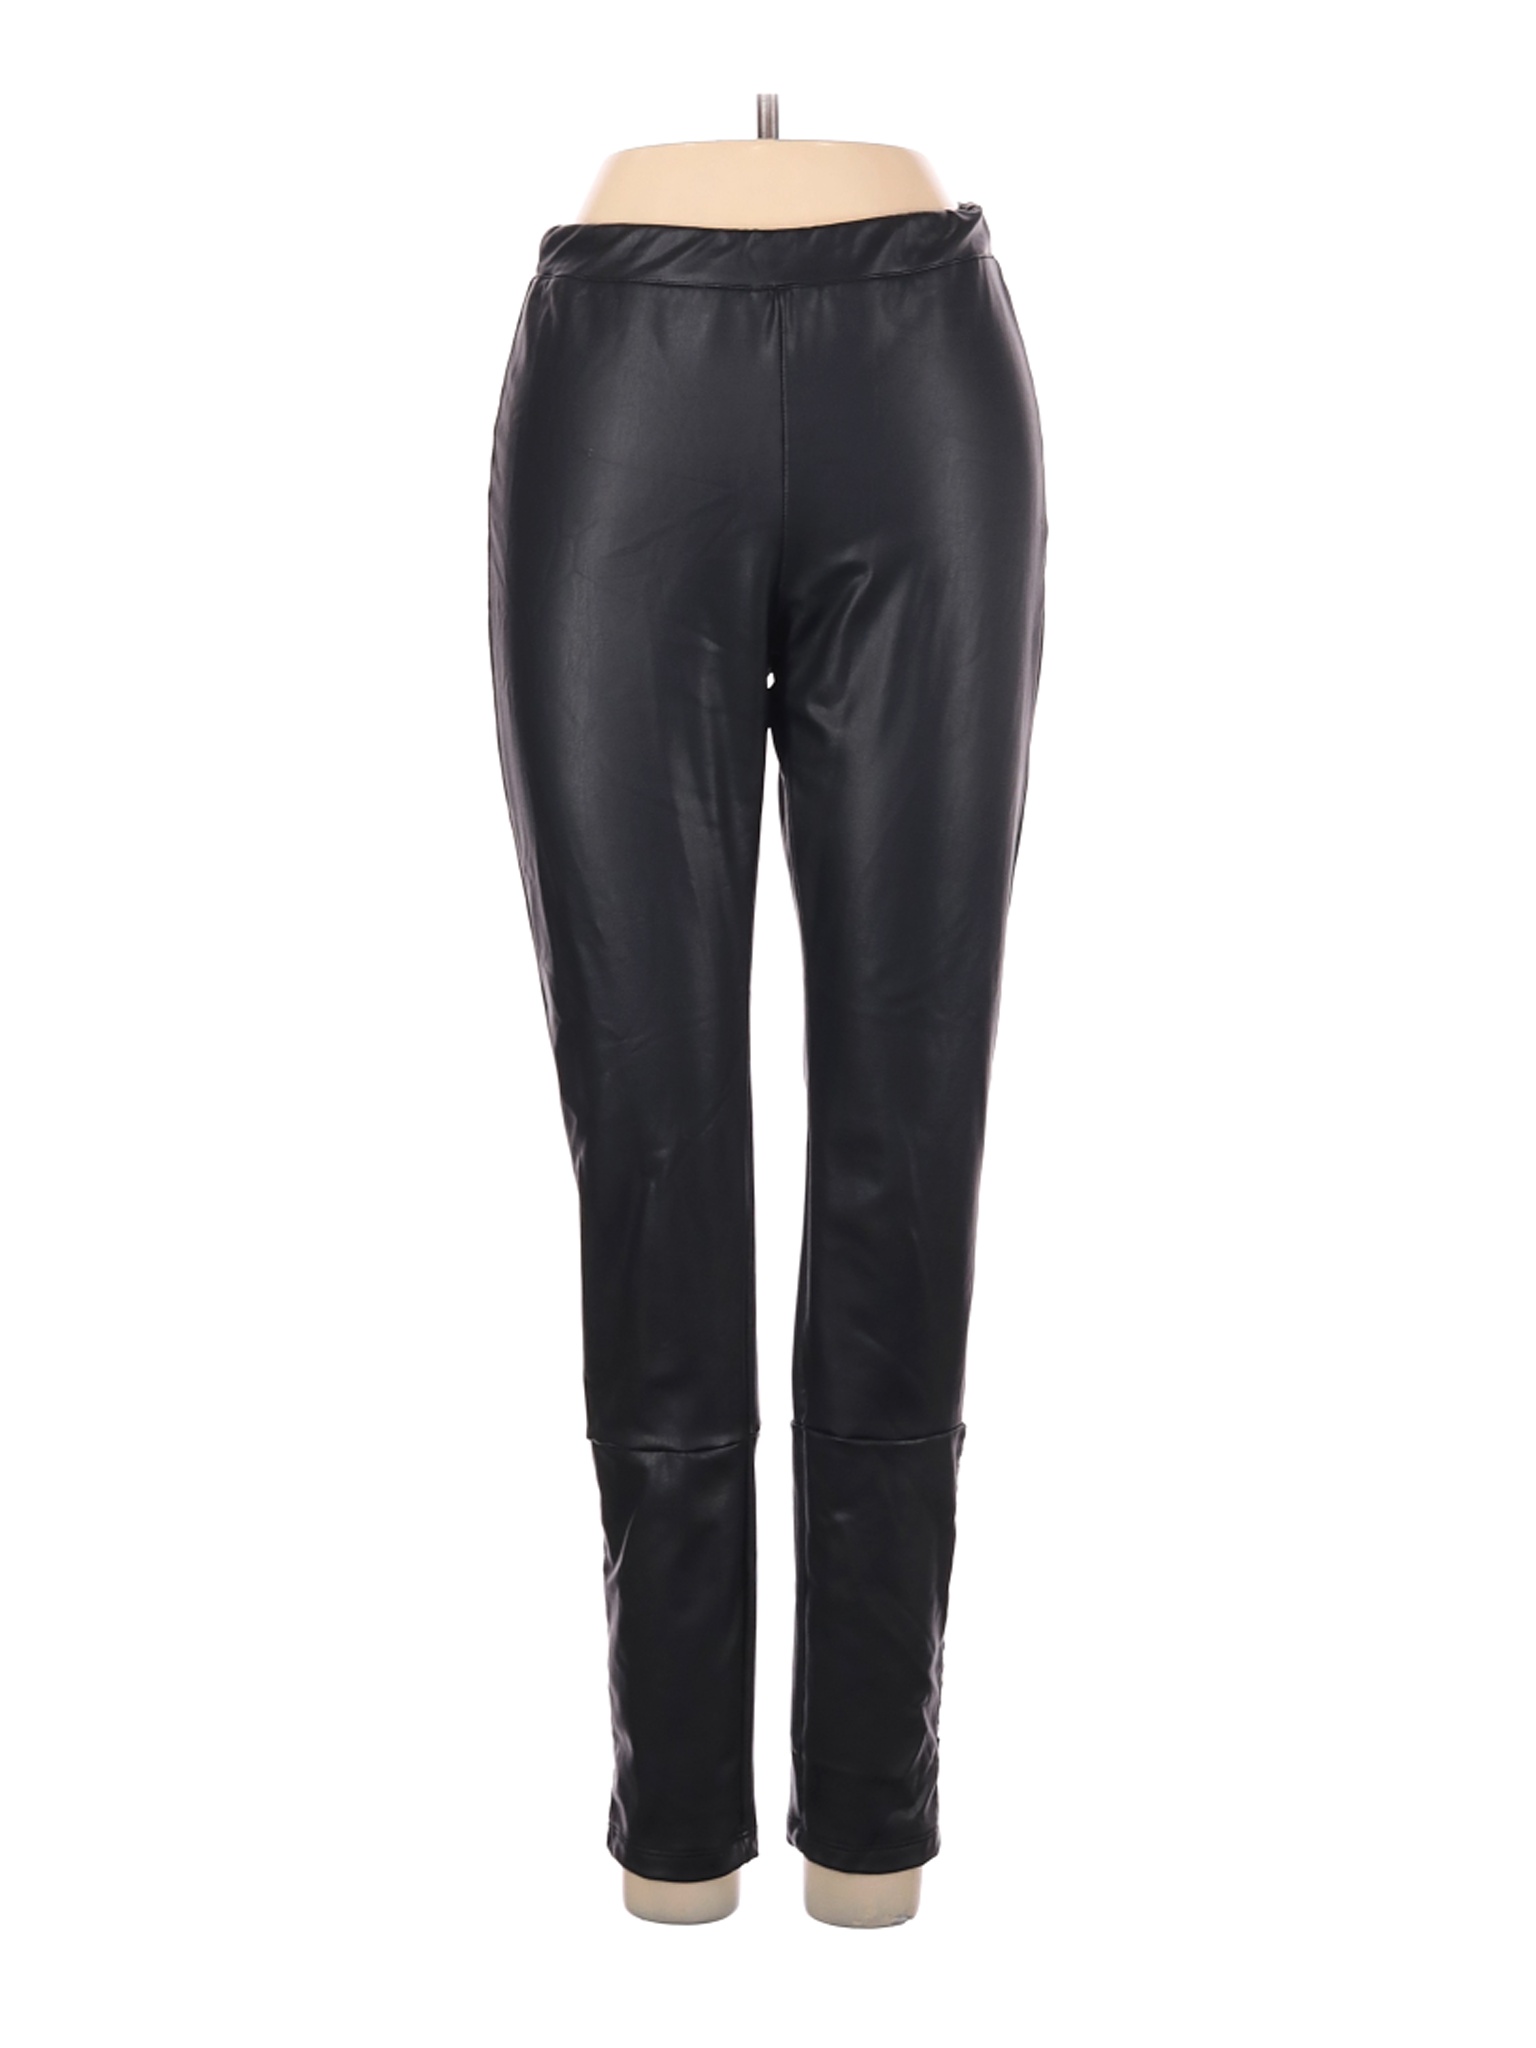 GF Collection Women Black Faux Leather Pants XS | eBay